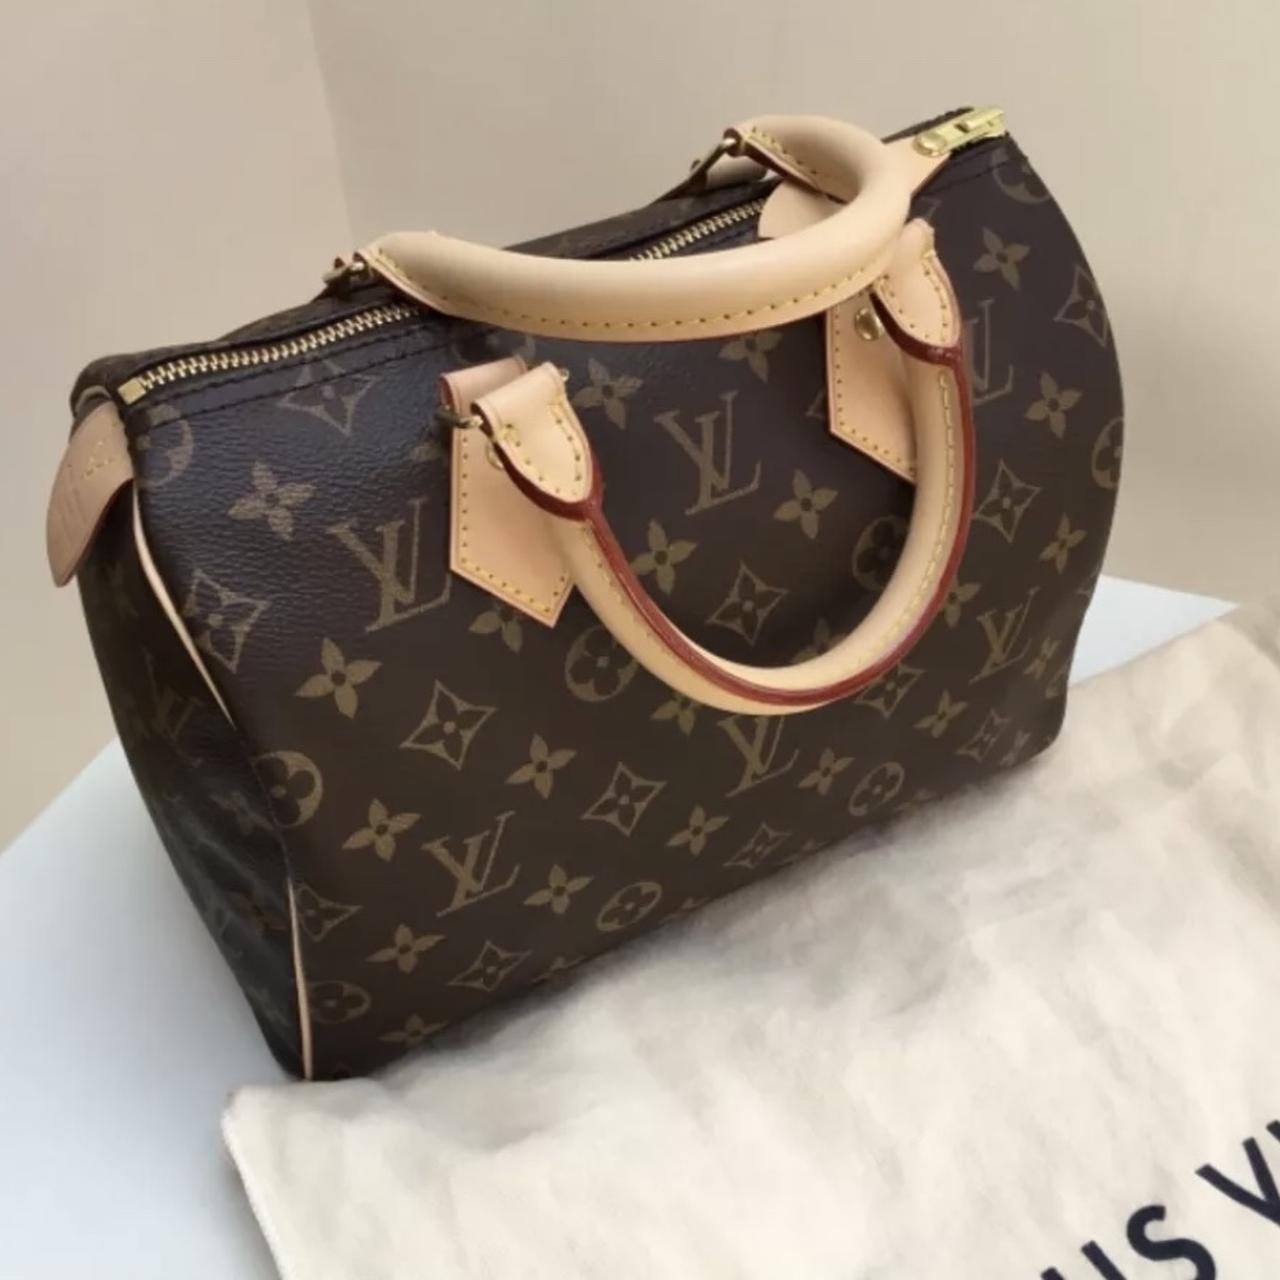 Authentic Speedy 30 Louis Vuitton Handbag -Comes - Depop